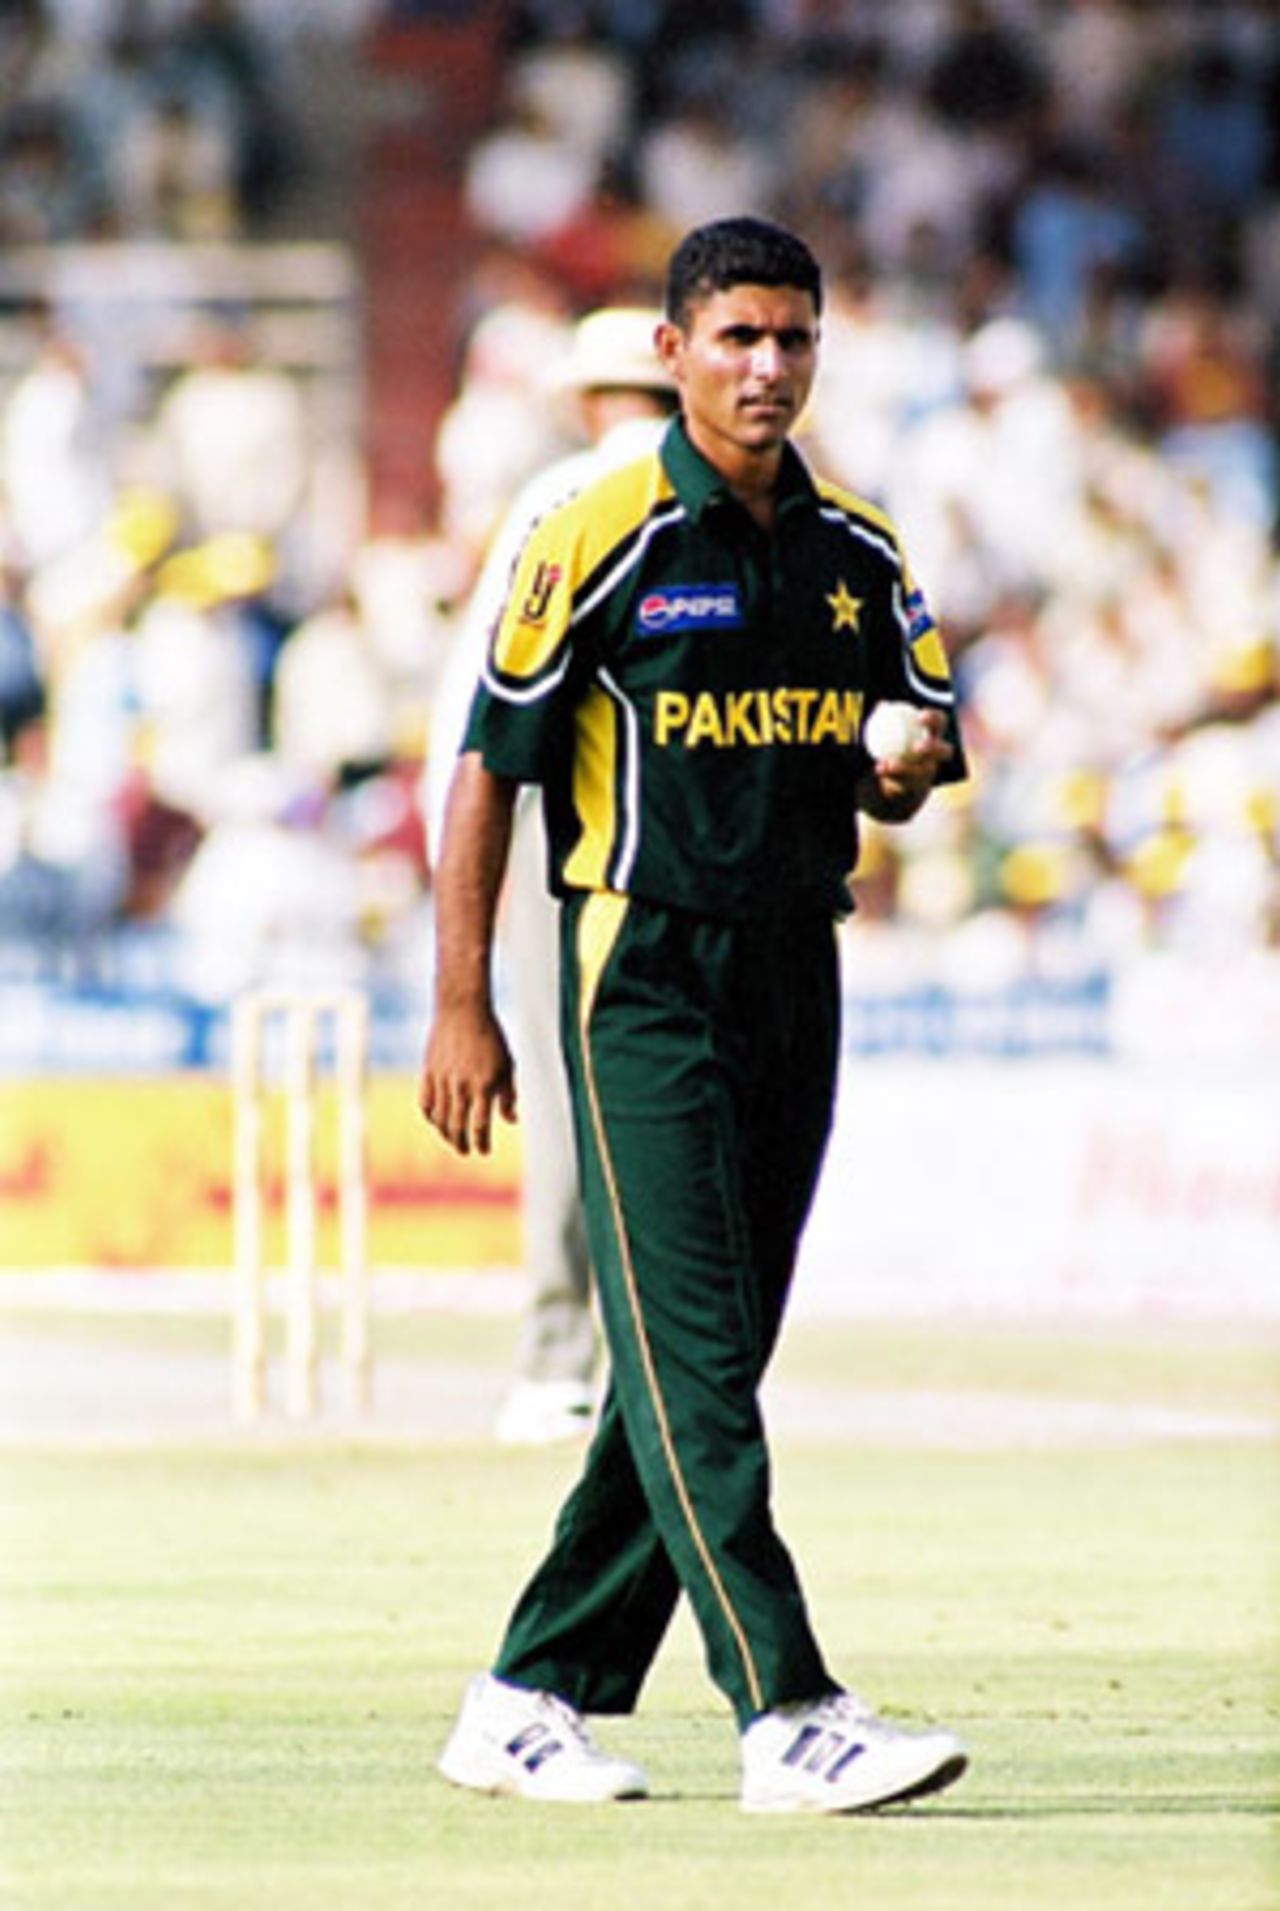 Abdul Razzaq at his bowling mark, 1st Match: Pakistan v Zimbabwe, Cherry Blossom Sharjah Cup, 3 April 2003